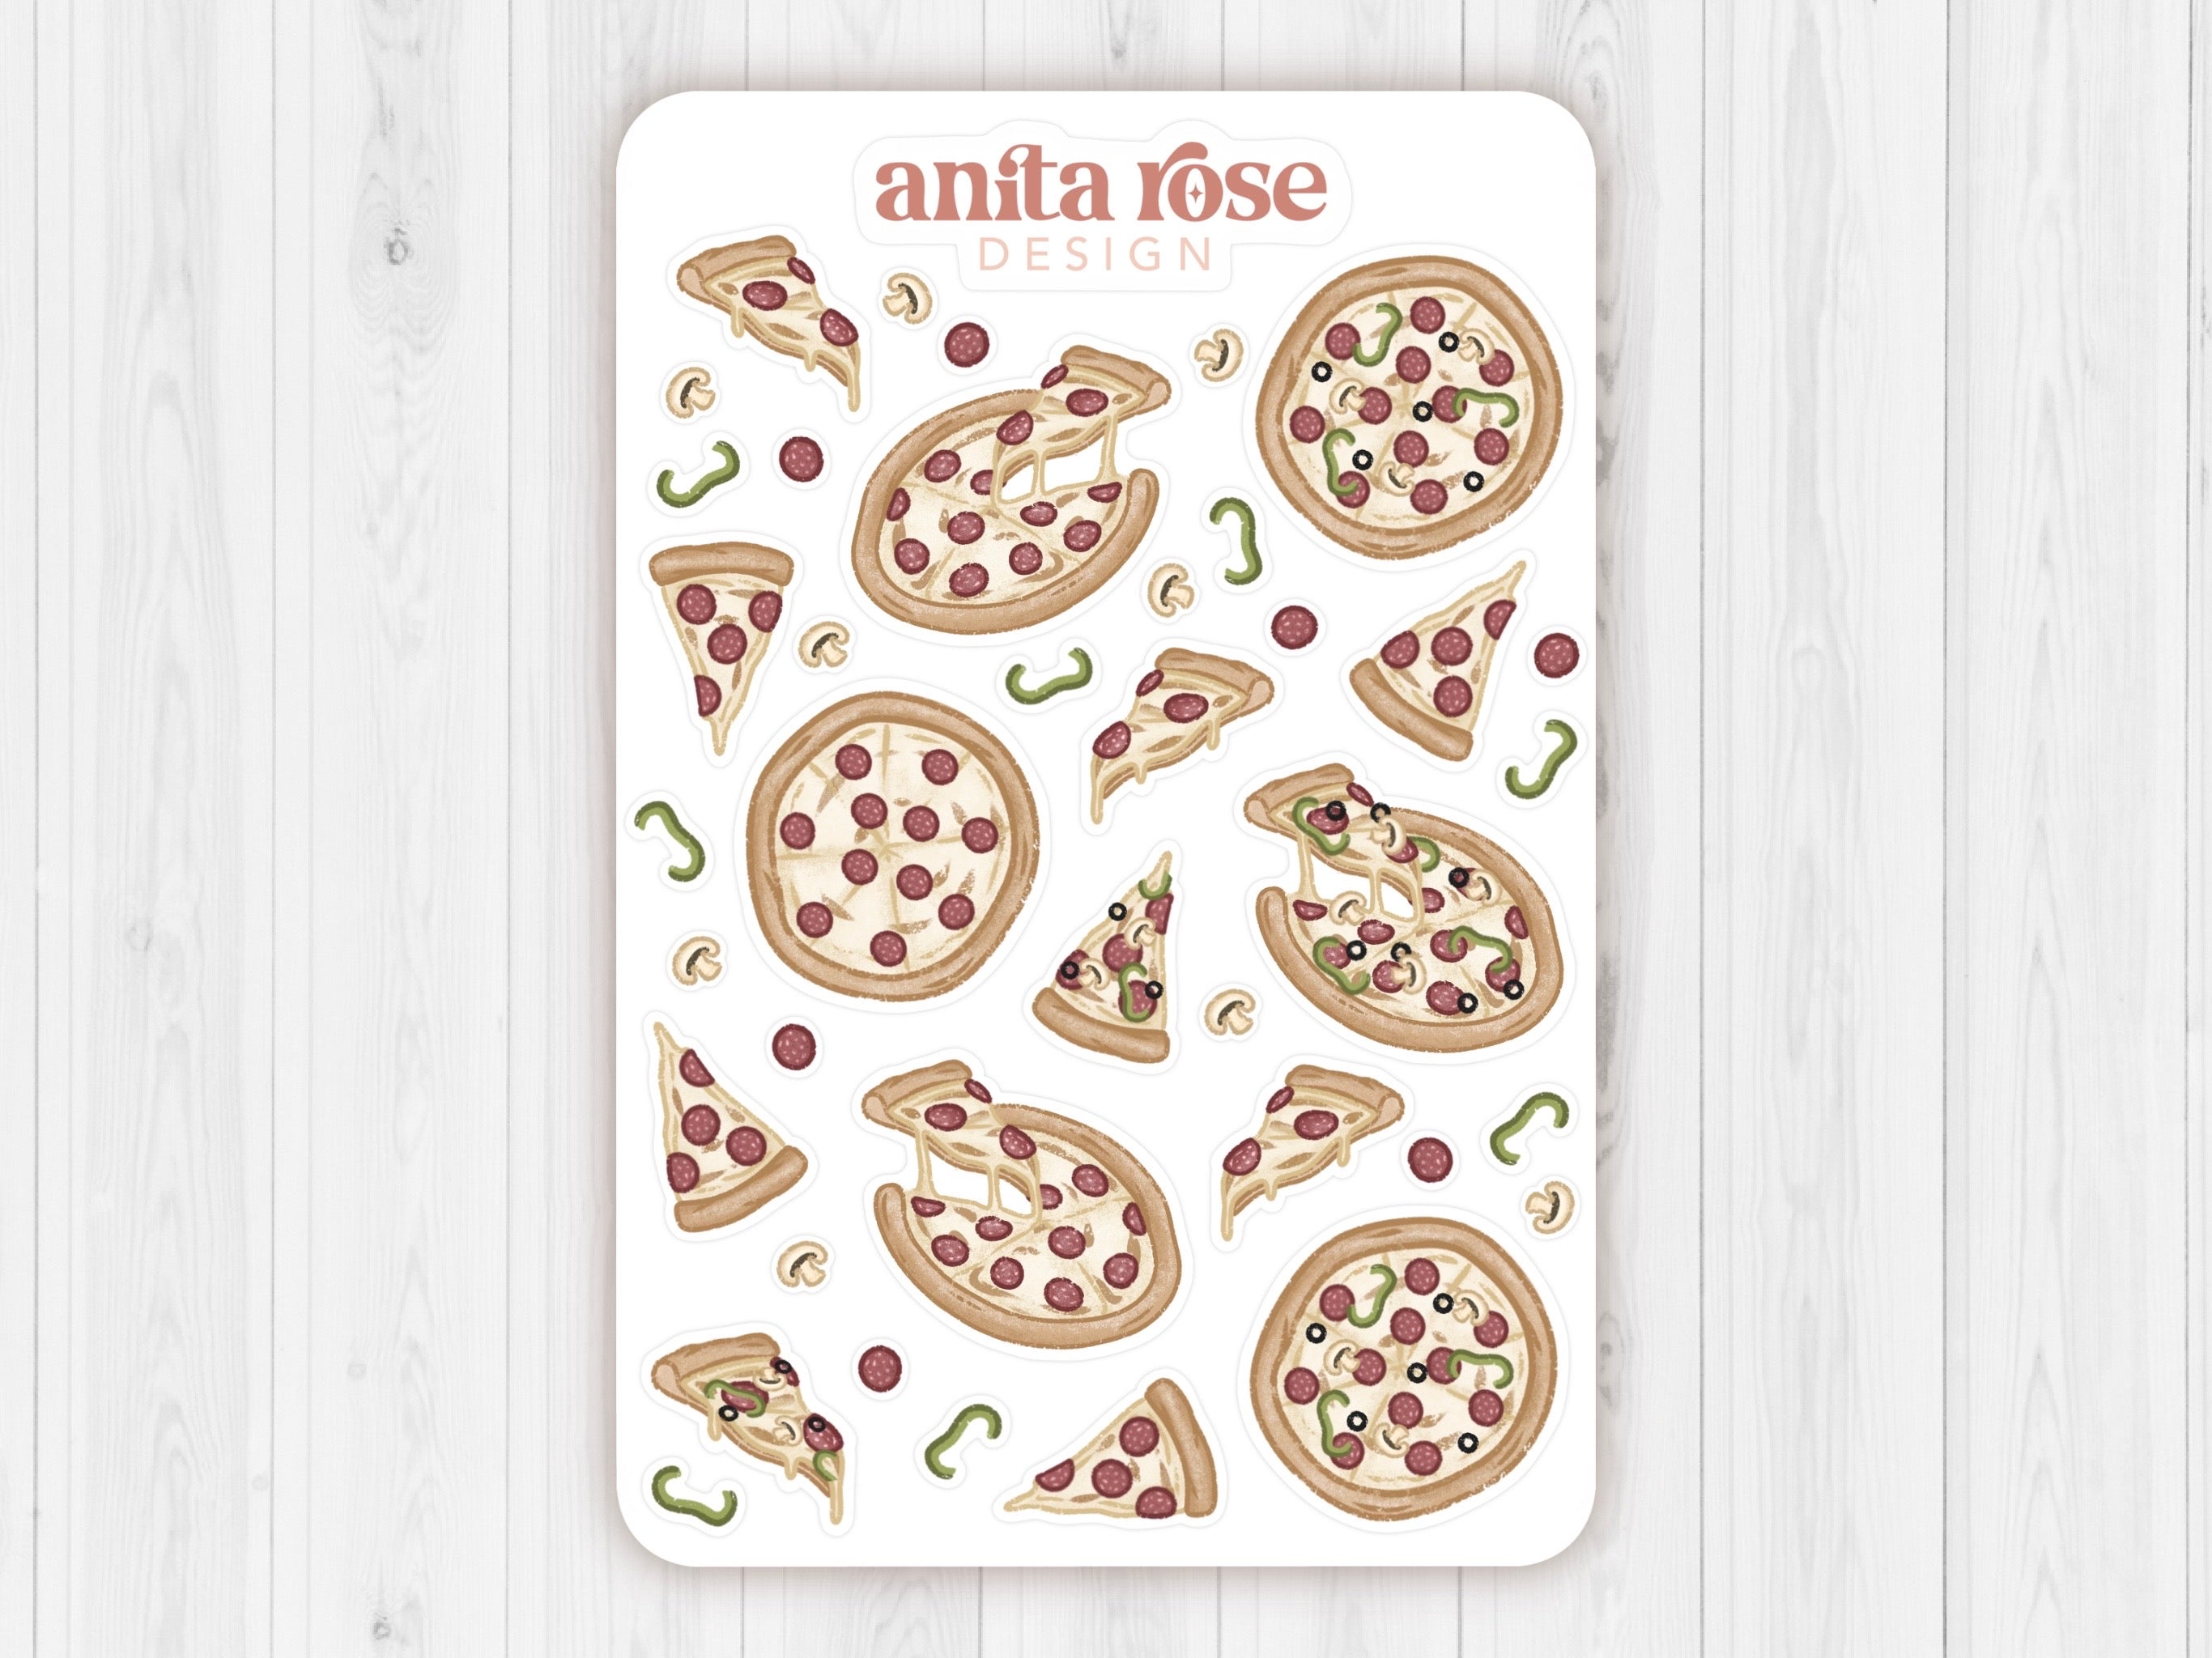 Pizza Party Sticker Sheet